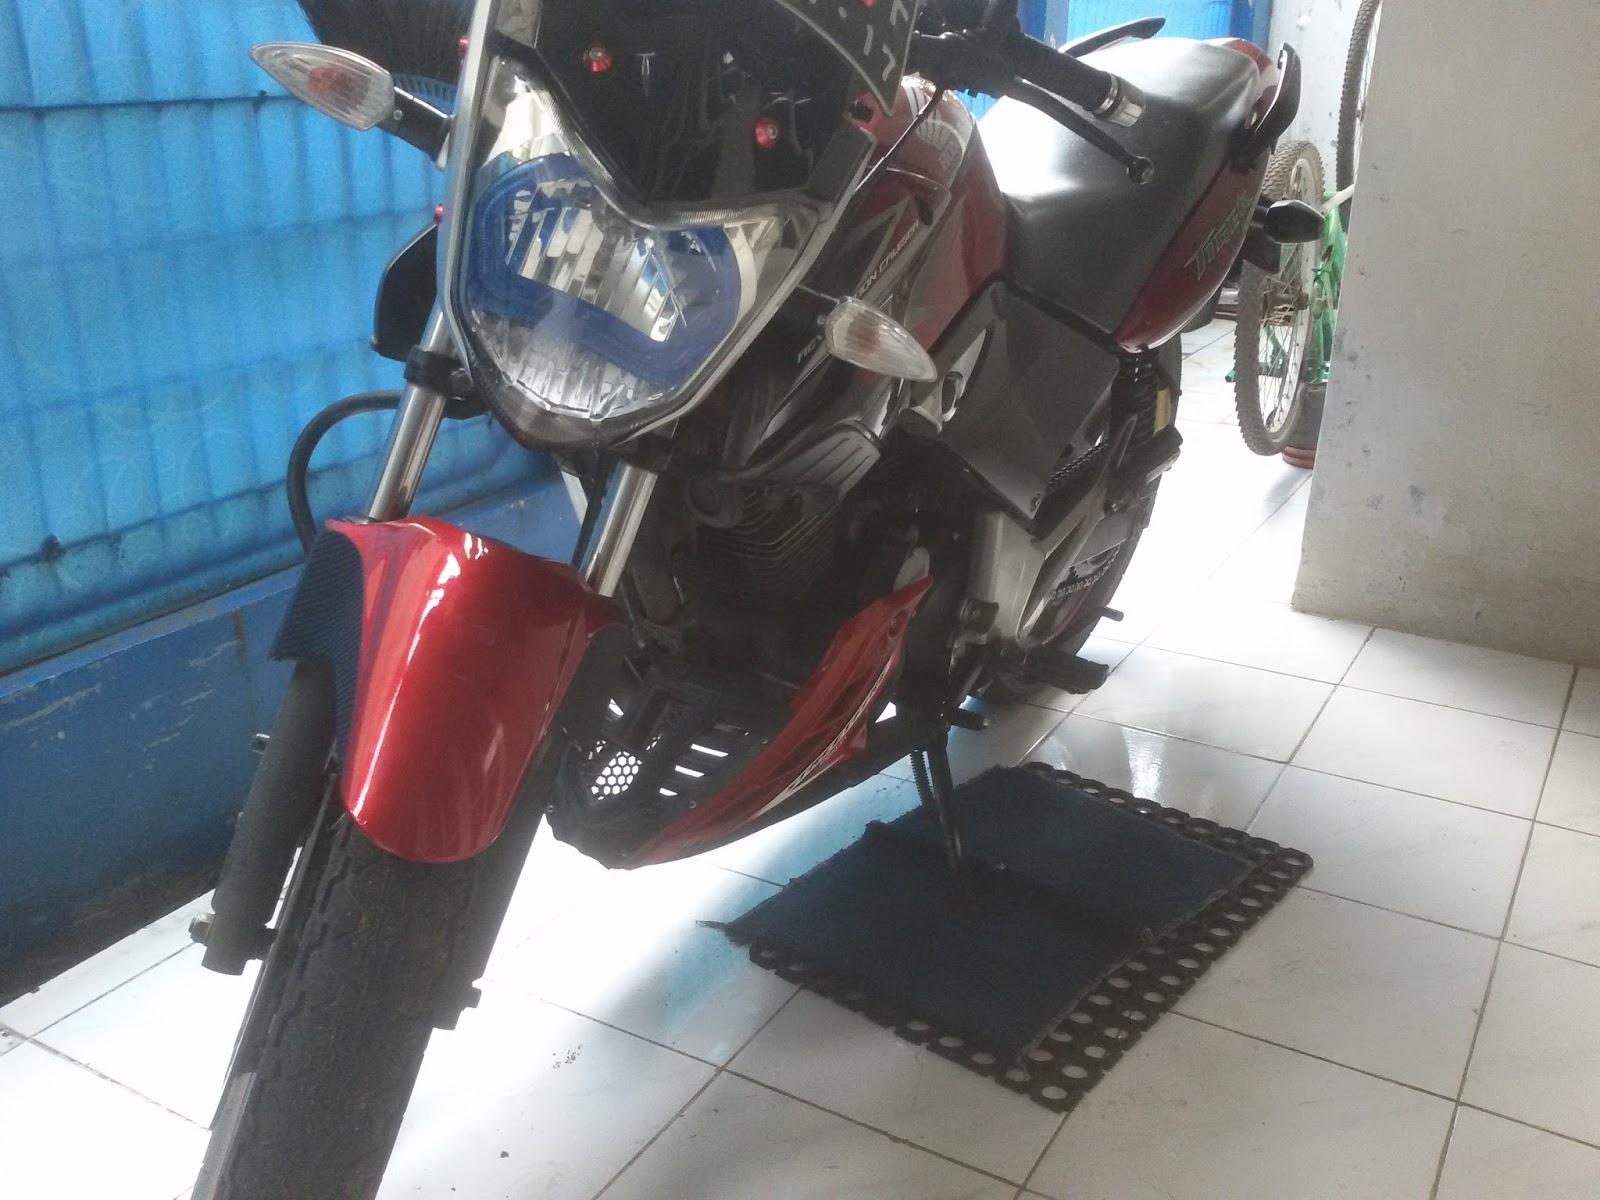 Rider Gokil Review Modif Lampu Byson Ke Honda Tiger Revo Cukup